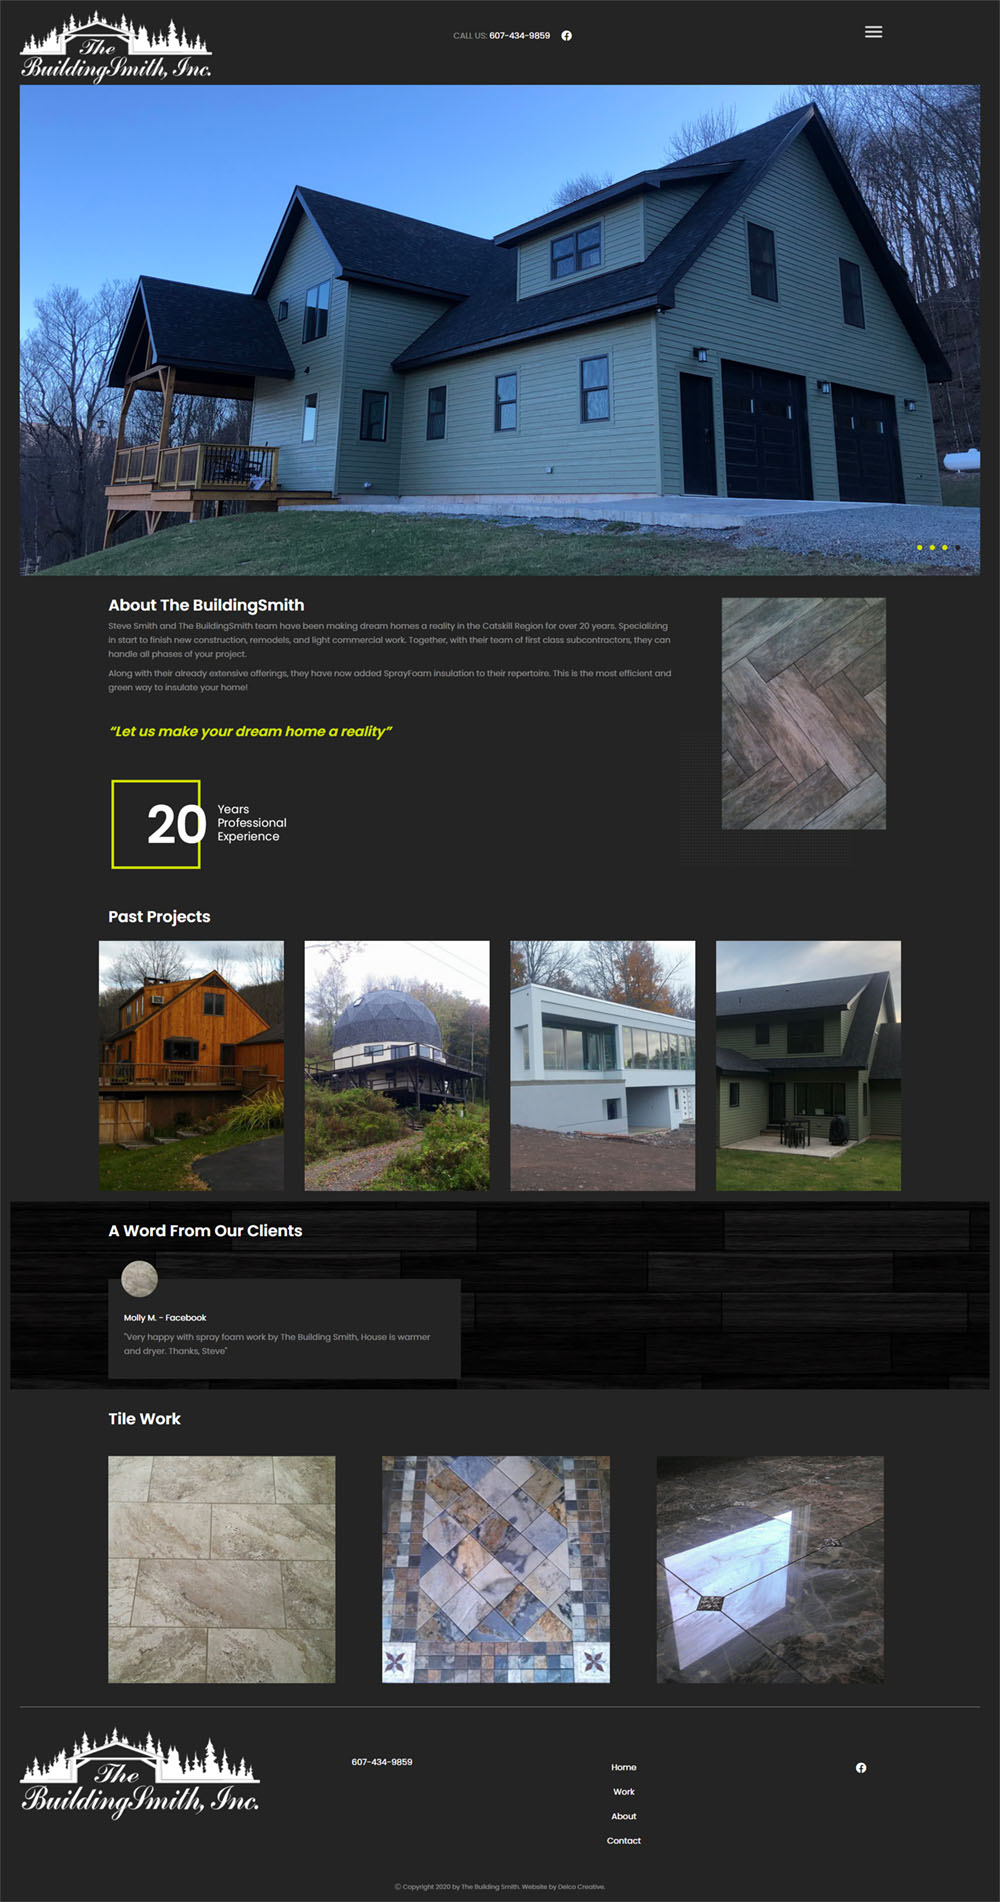 The BuildingSmith Website